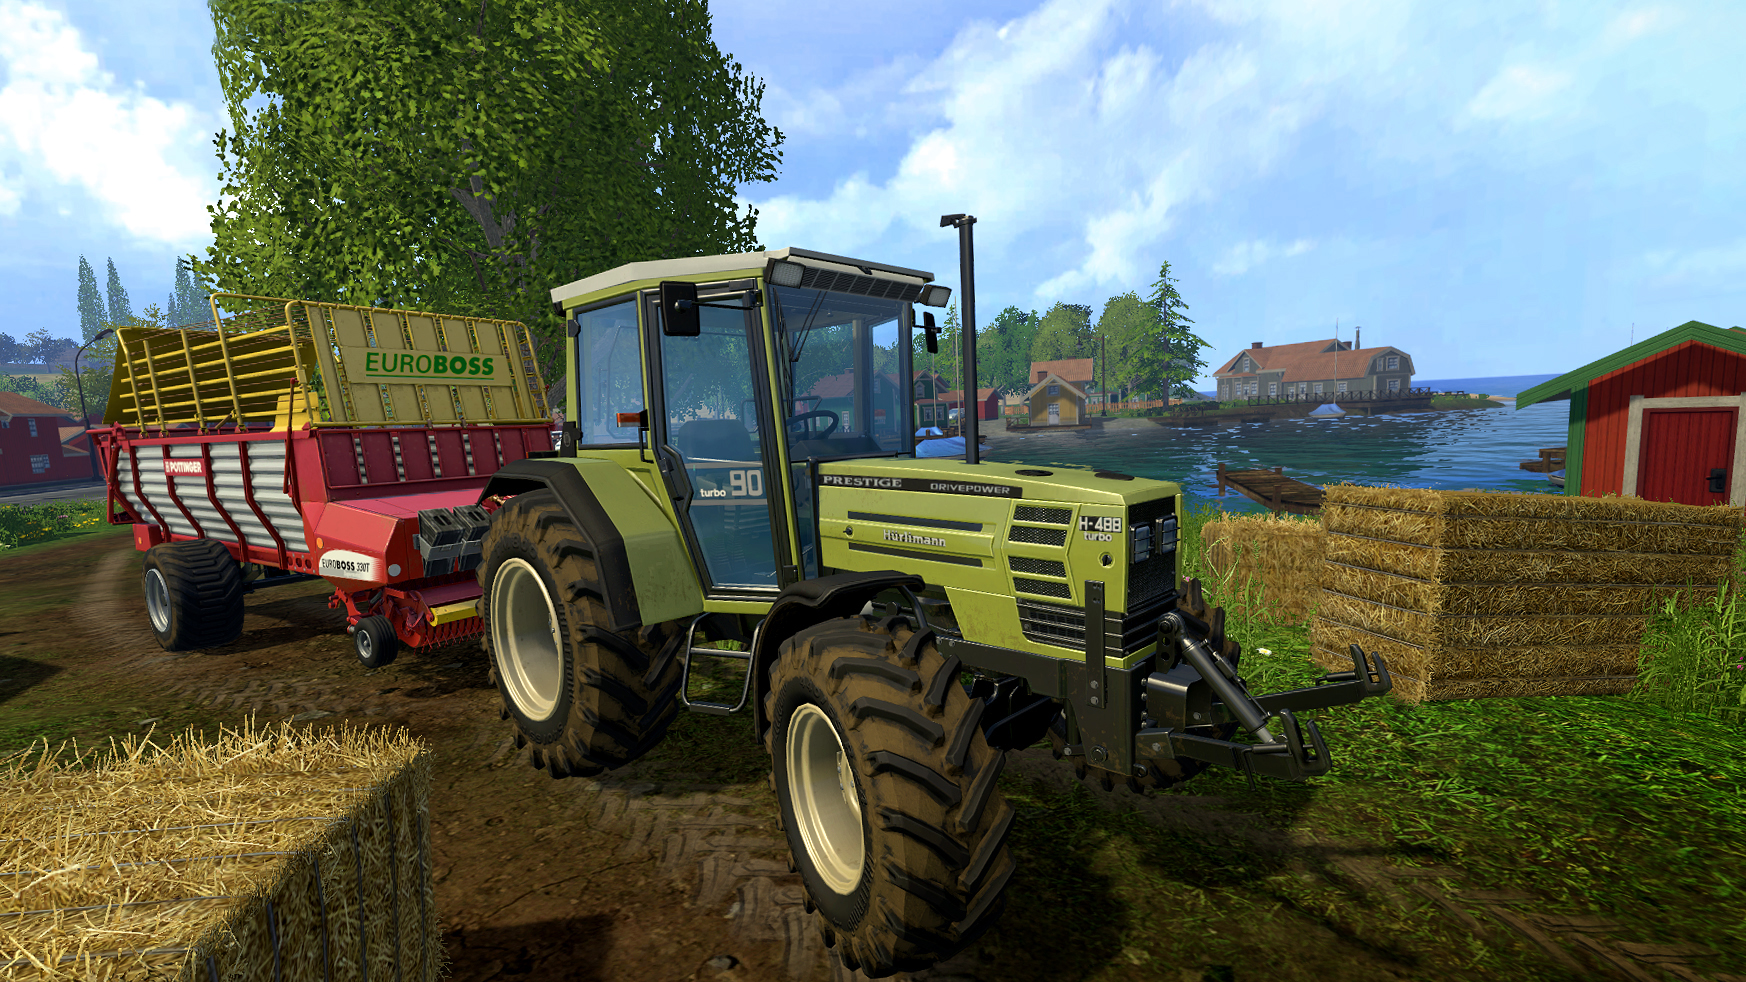 Farming Simulator 15 on Steam